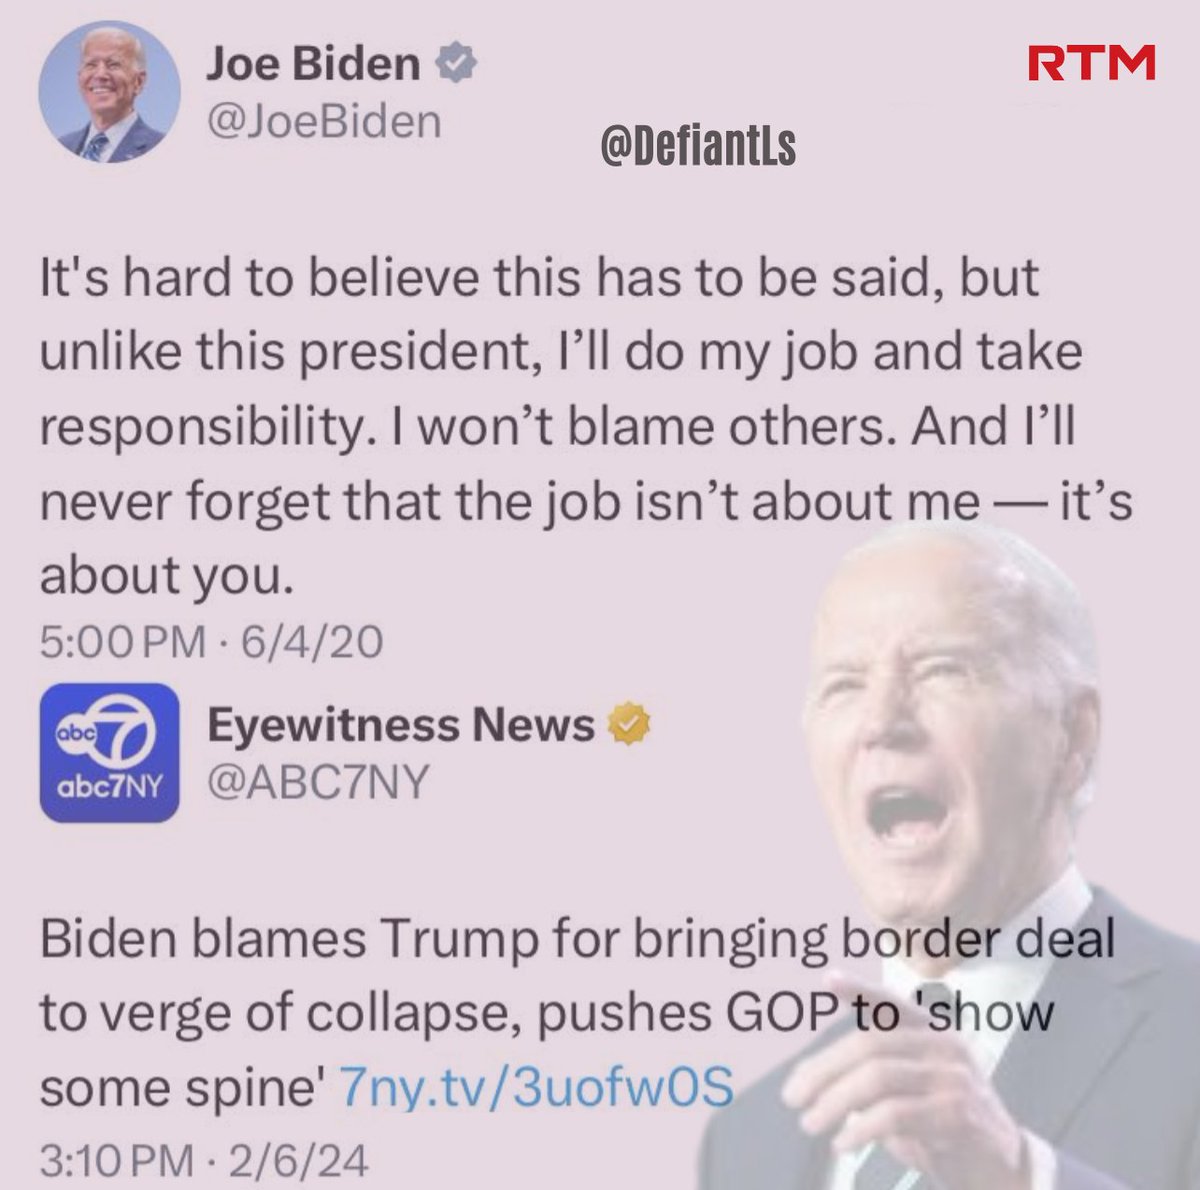 Who’s to blame for the border crisis? Trump or Biden?